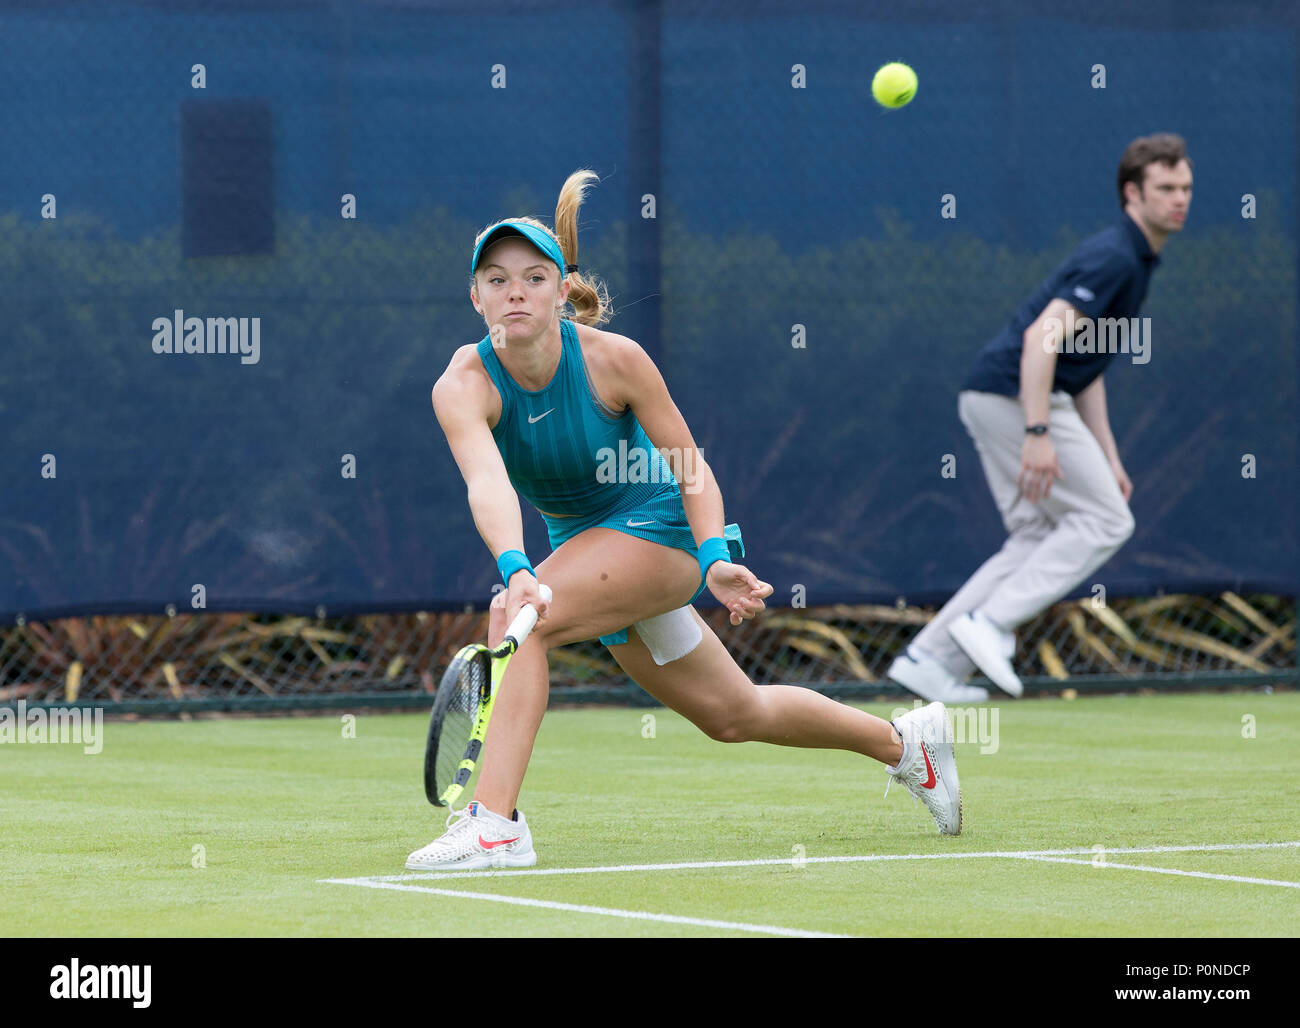 Katie Swan in tennis action during the Nature Valley Open 2018 - Katie Swan Tennis Player Stock Photo